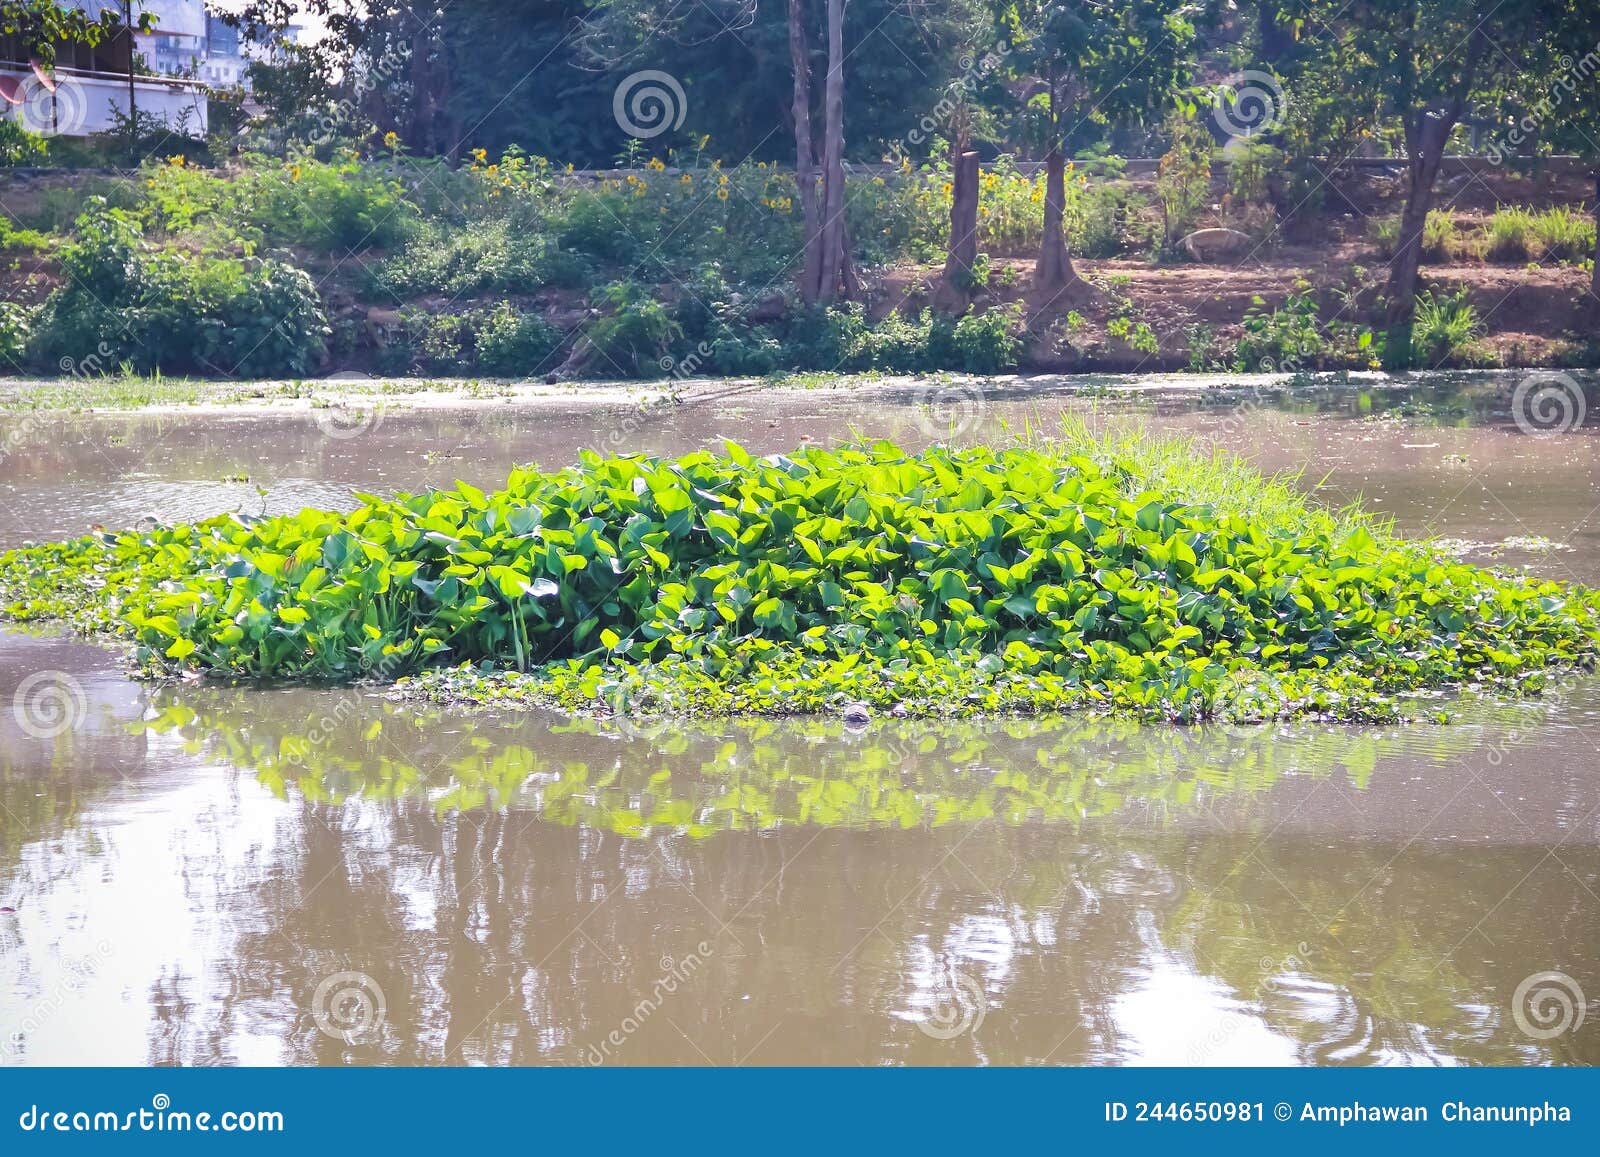 Ã Â¸Âºbig group natural floating water hyacinth green plants eichornia crassipes in the river